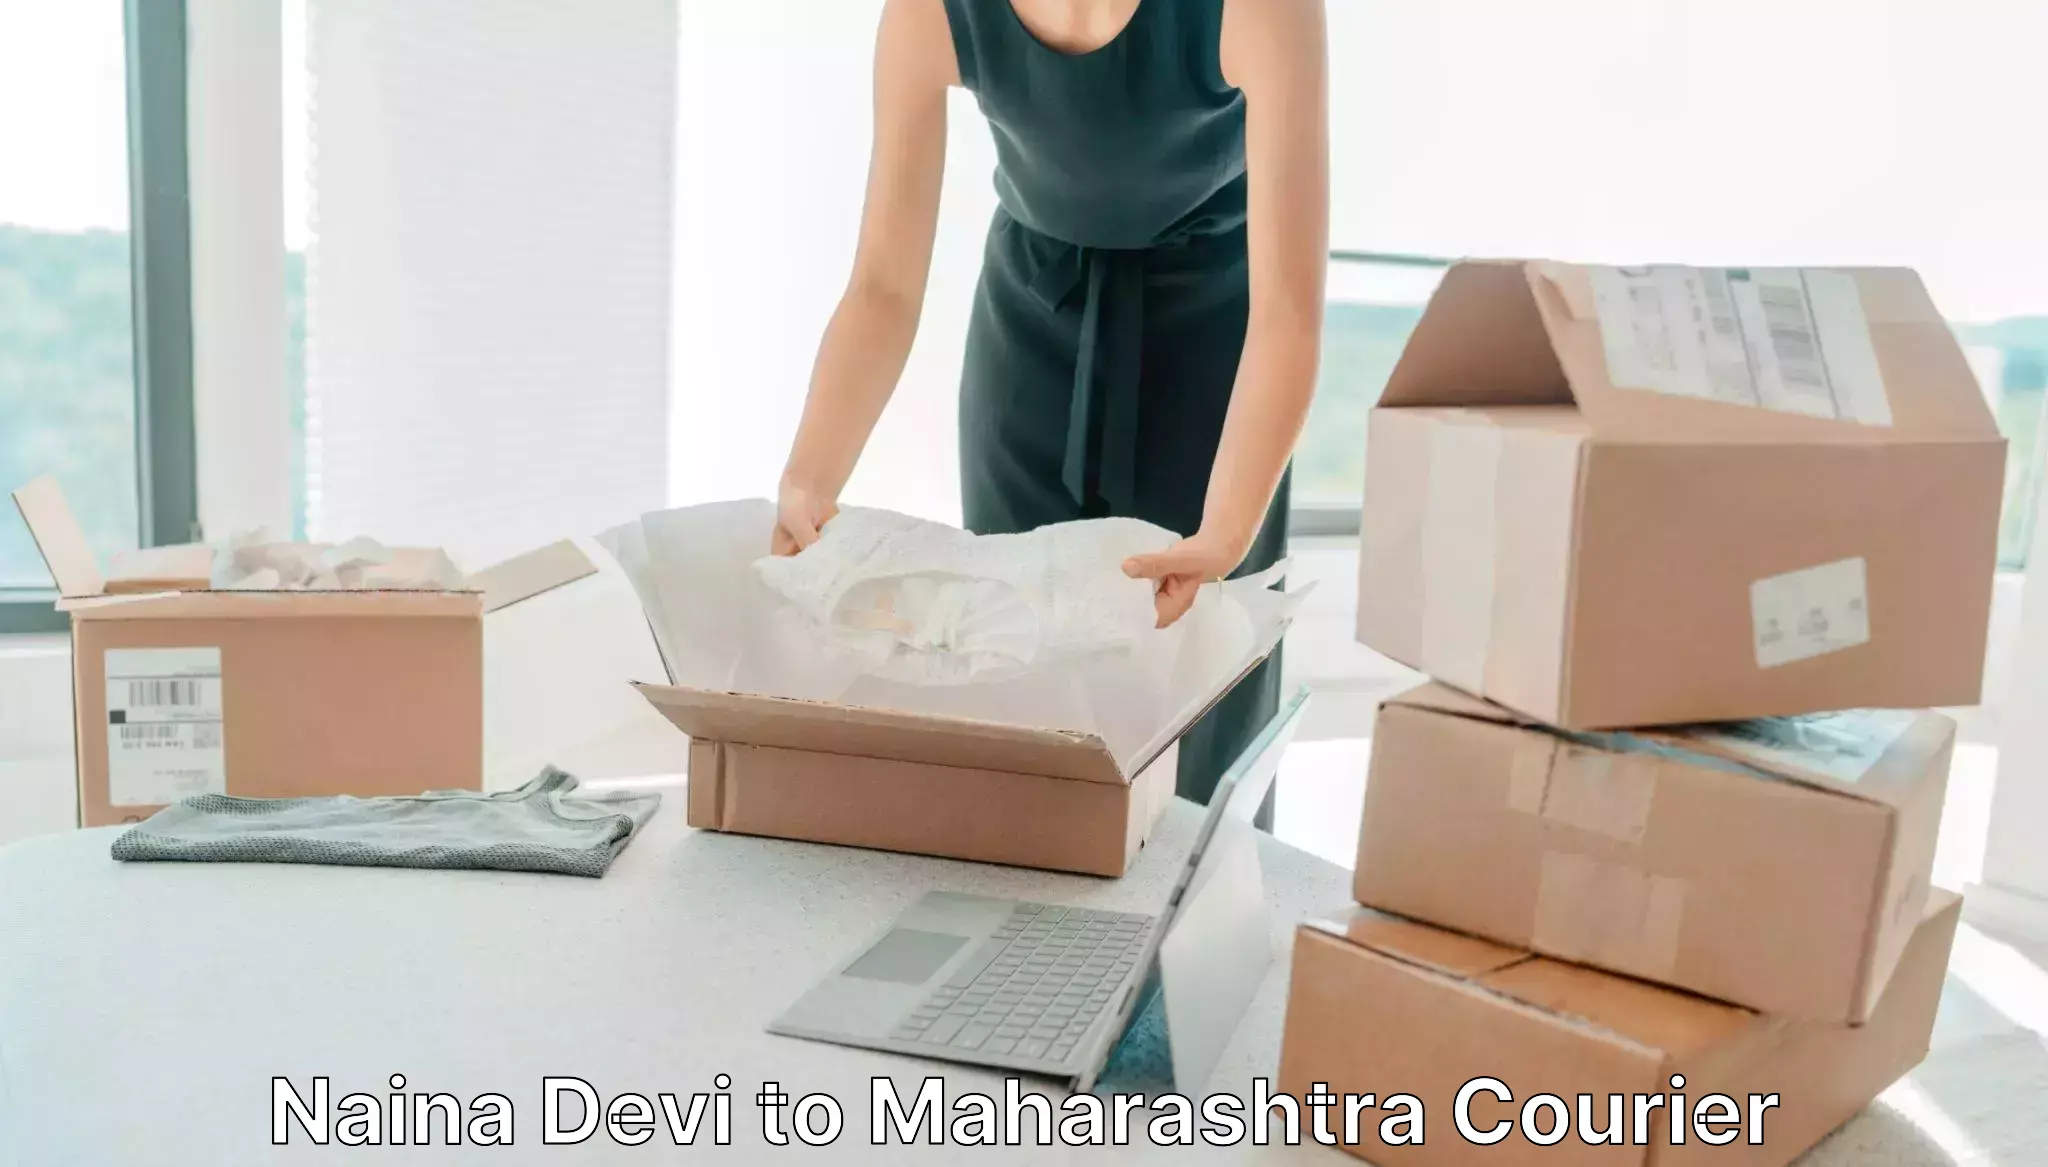 Courier service comparison Naina Devi to Karanja